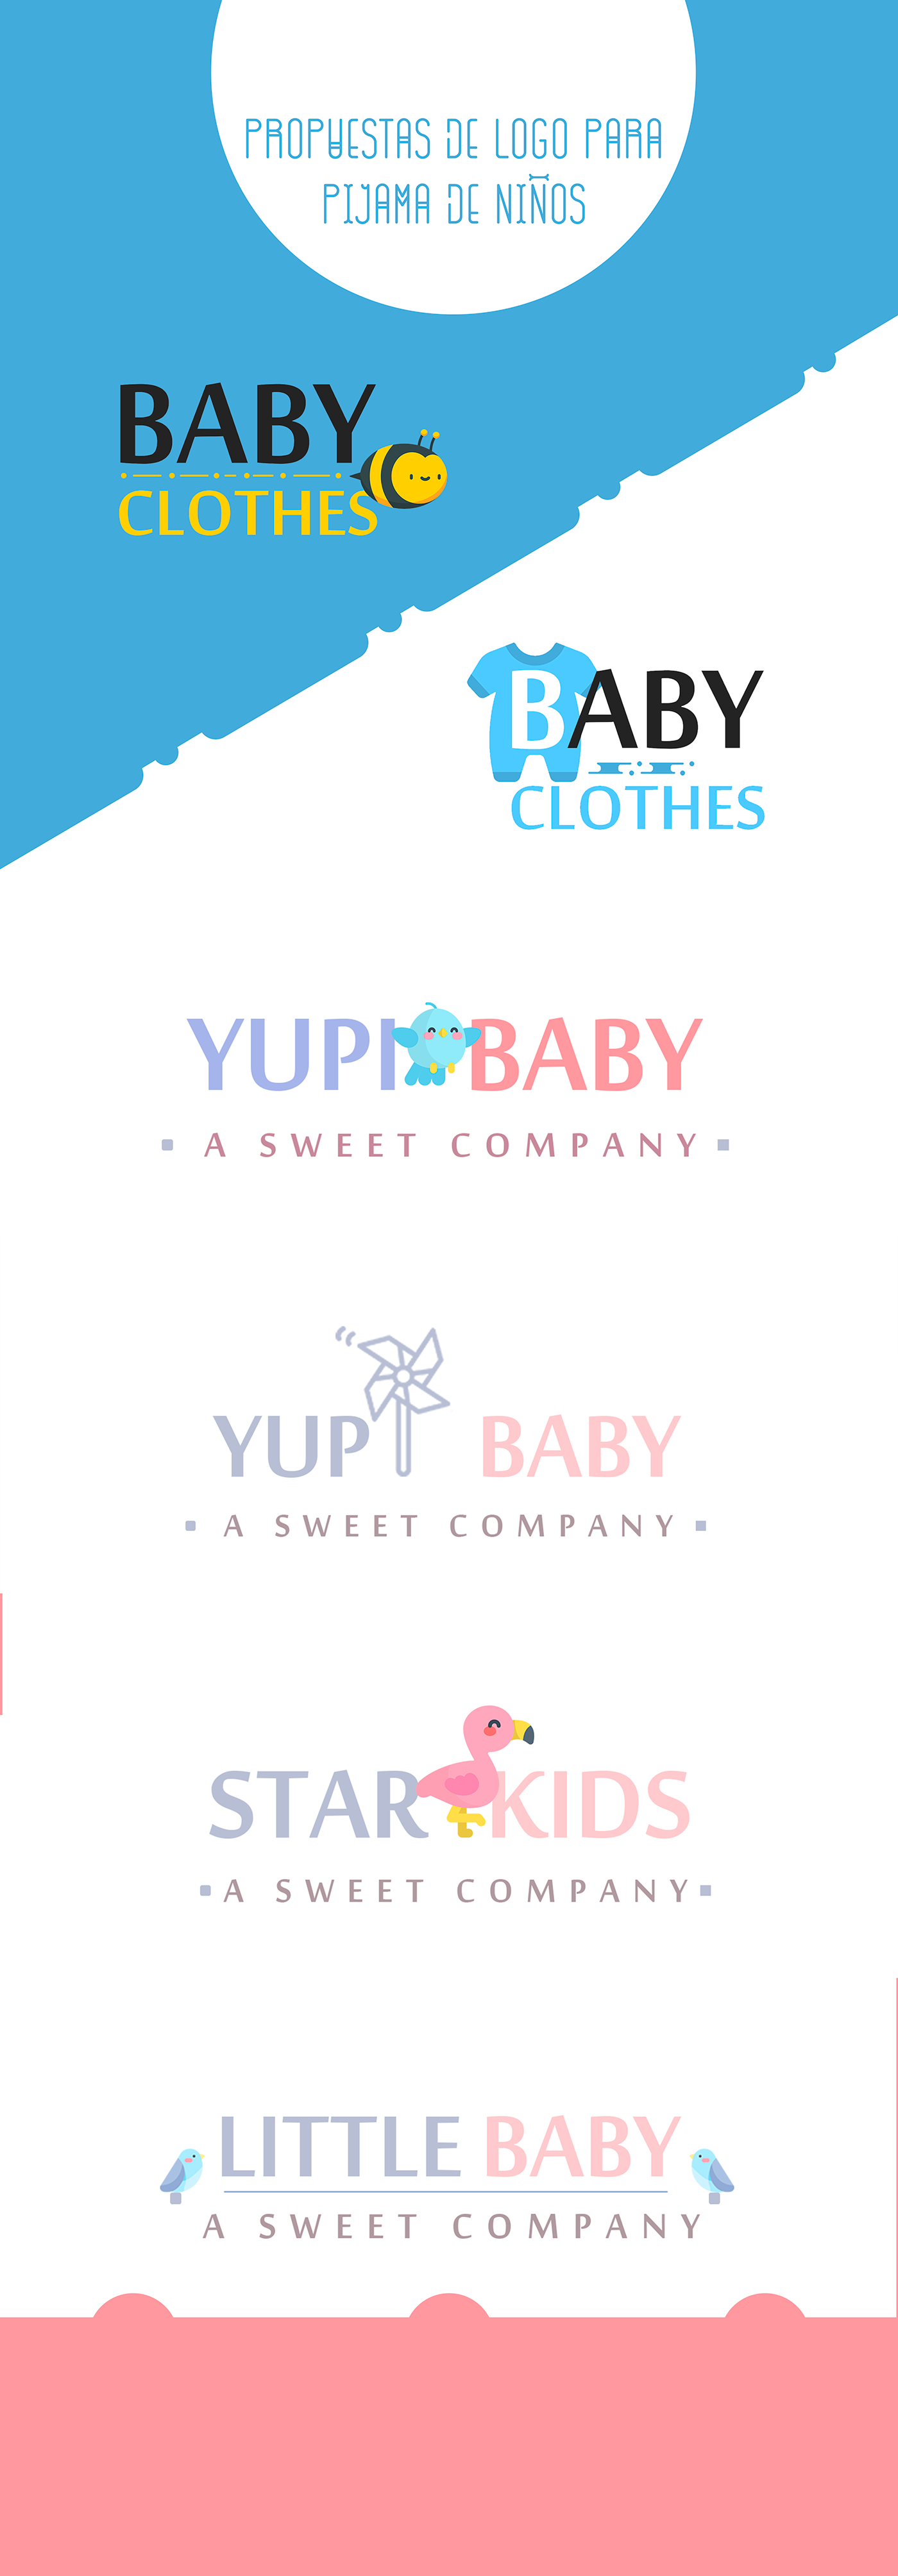 logo marca branding  baby kids peru venezuela Bym Art